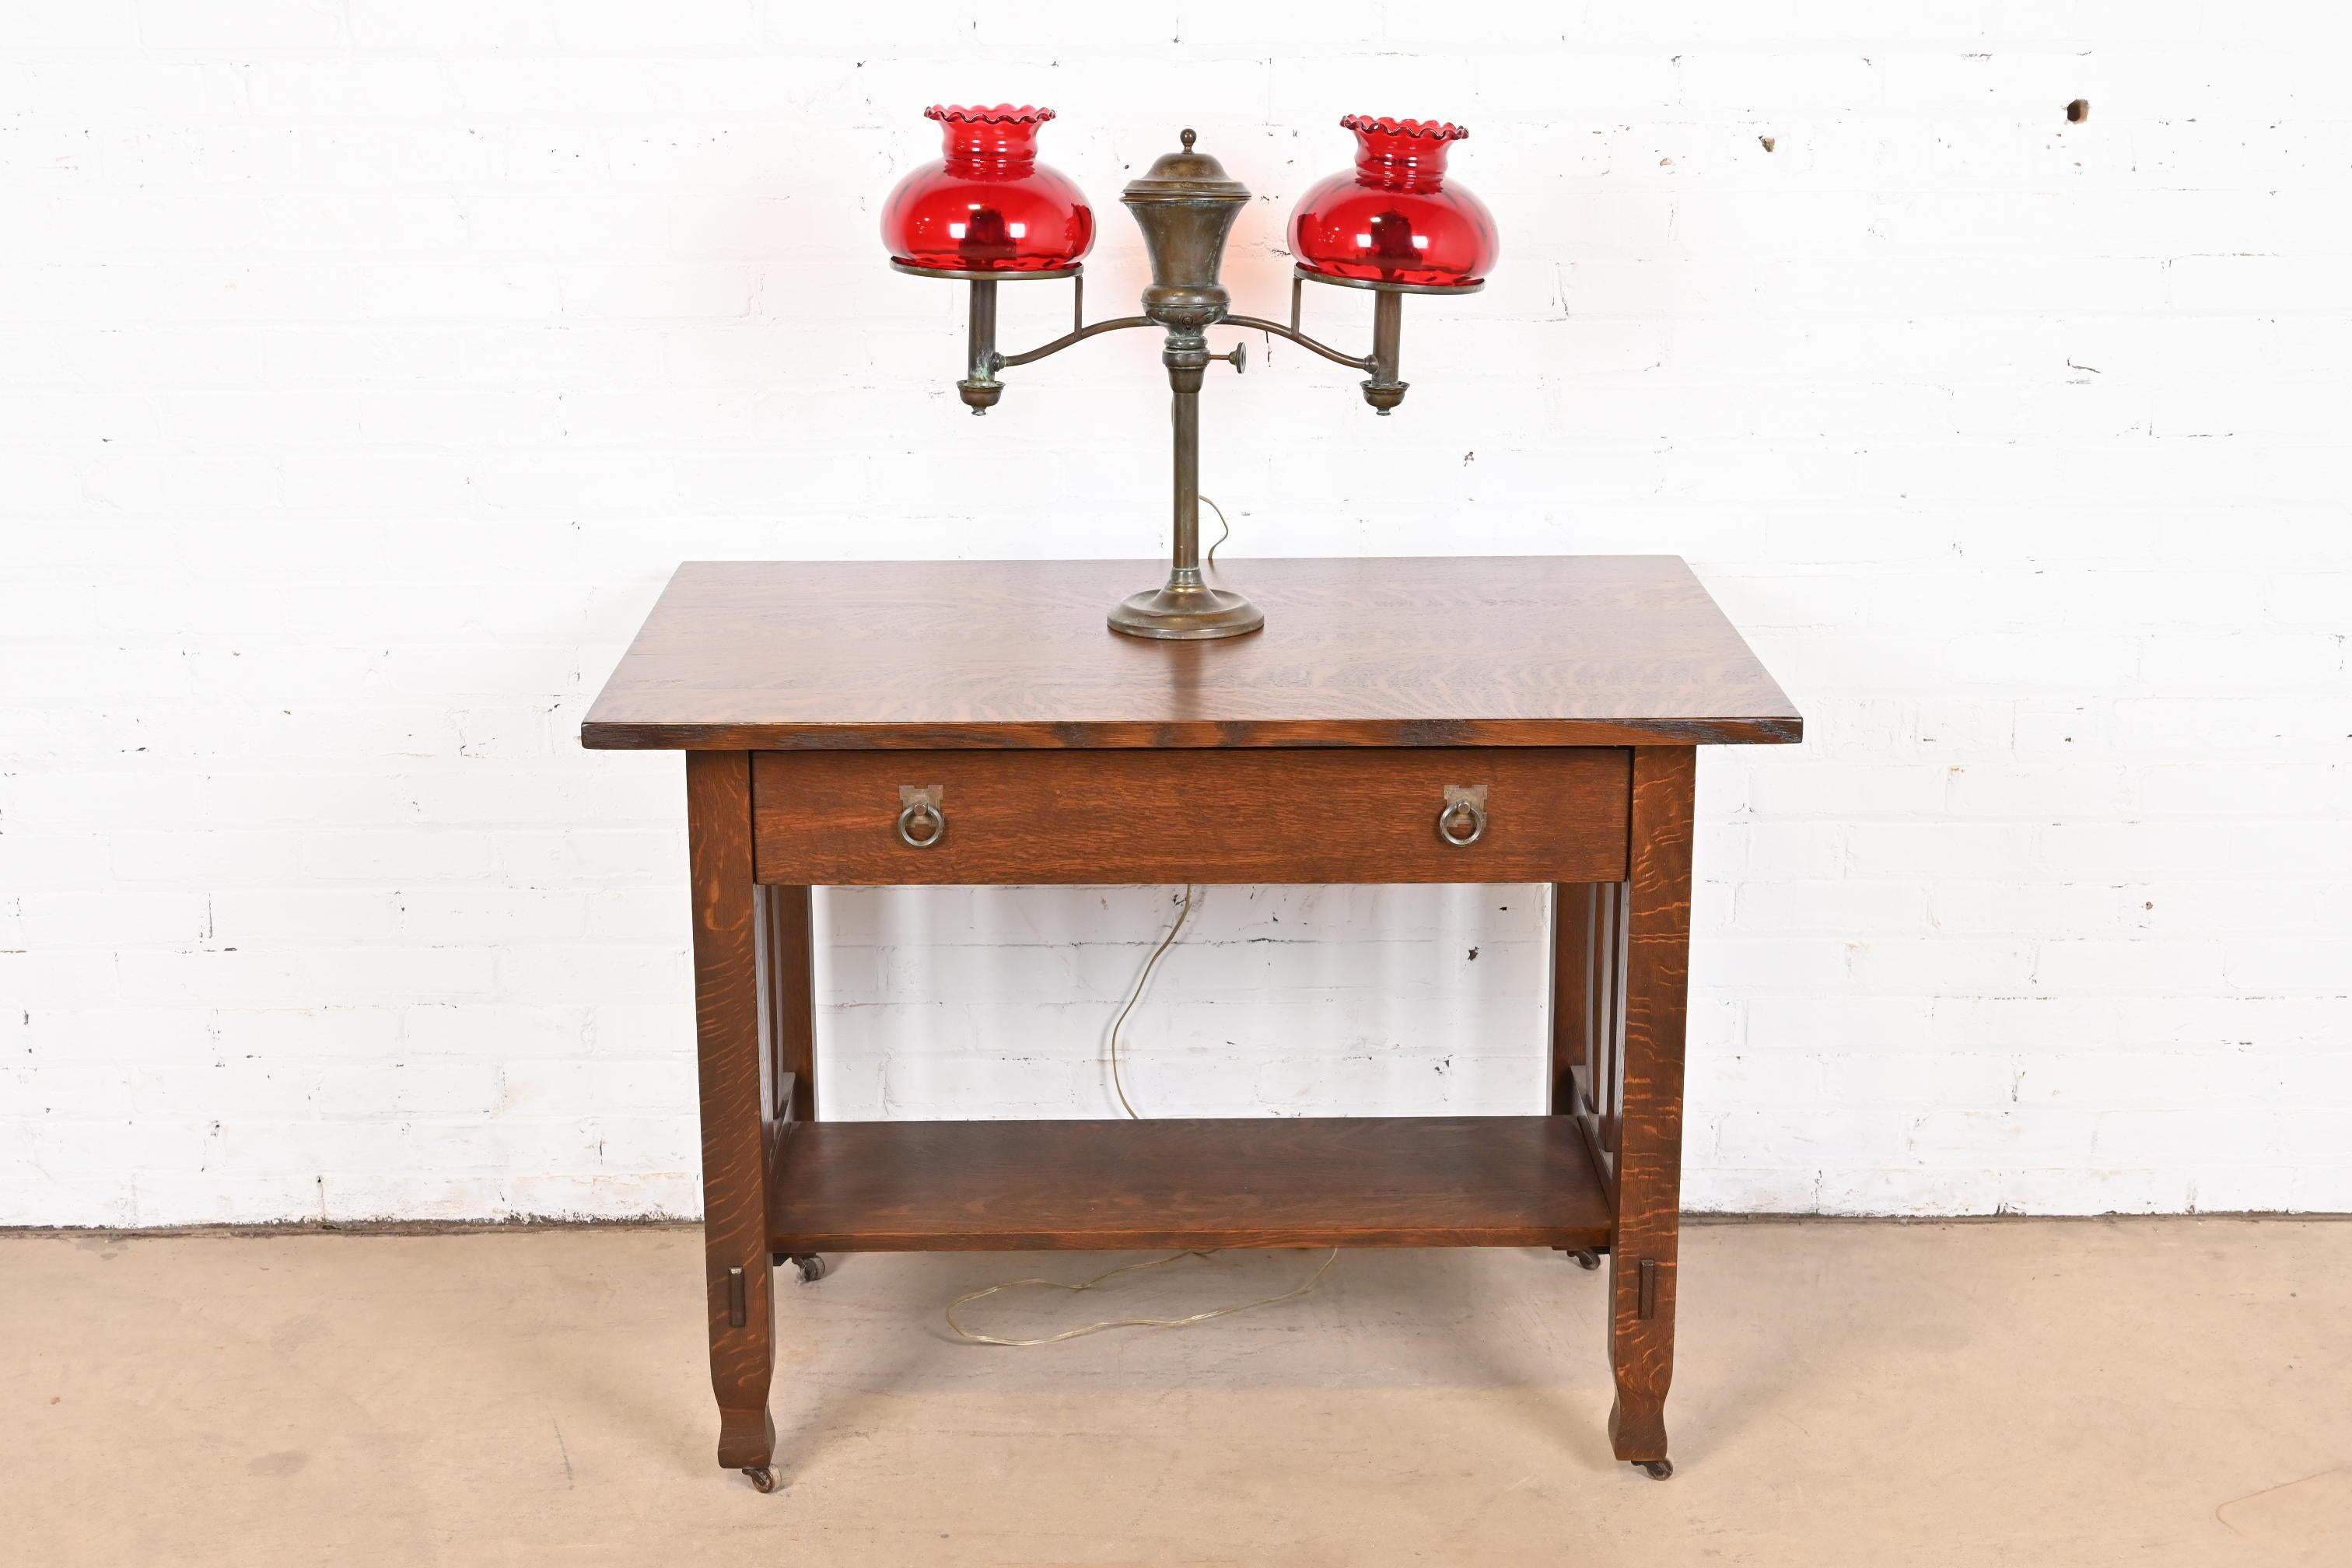 American Tiffany & Co. Antique Bronze Argon Double Student Desk Lamp, Late 19th Century For Sale